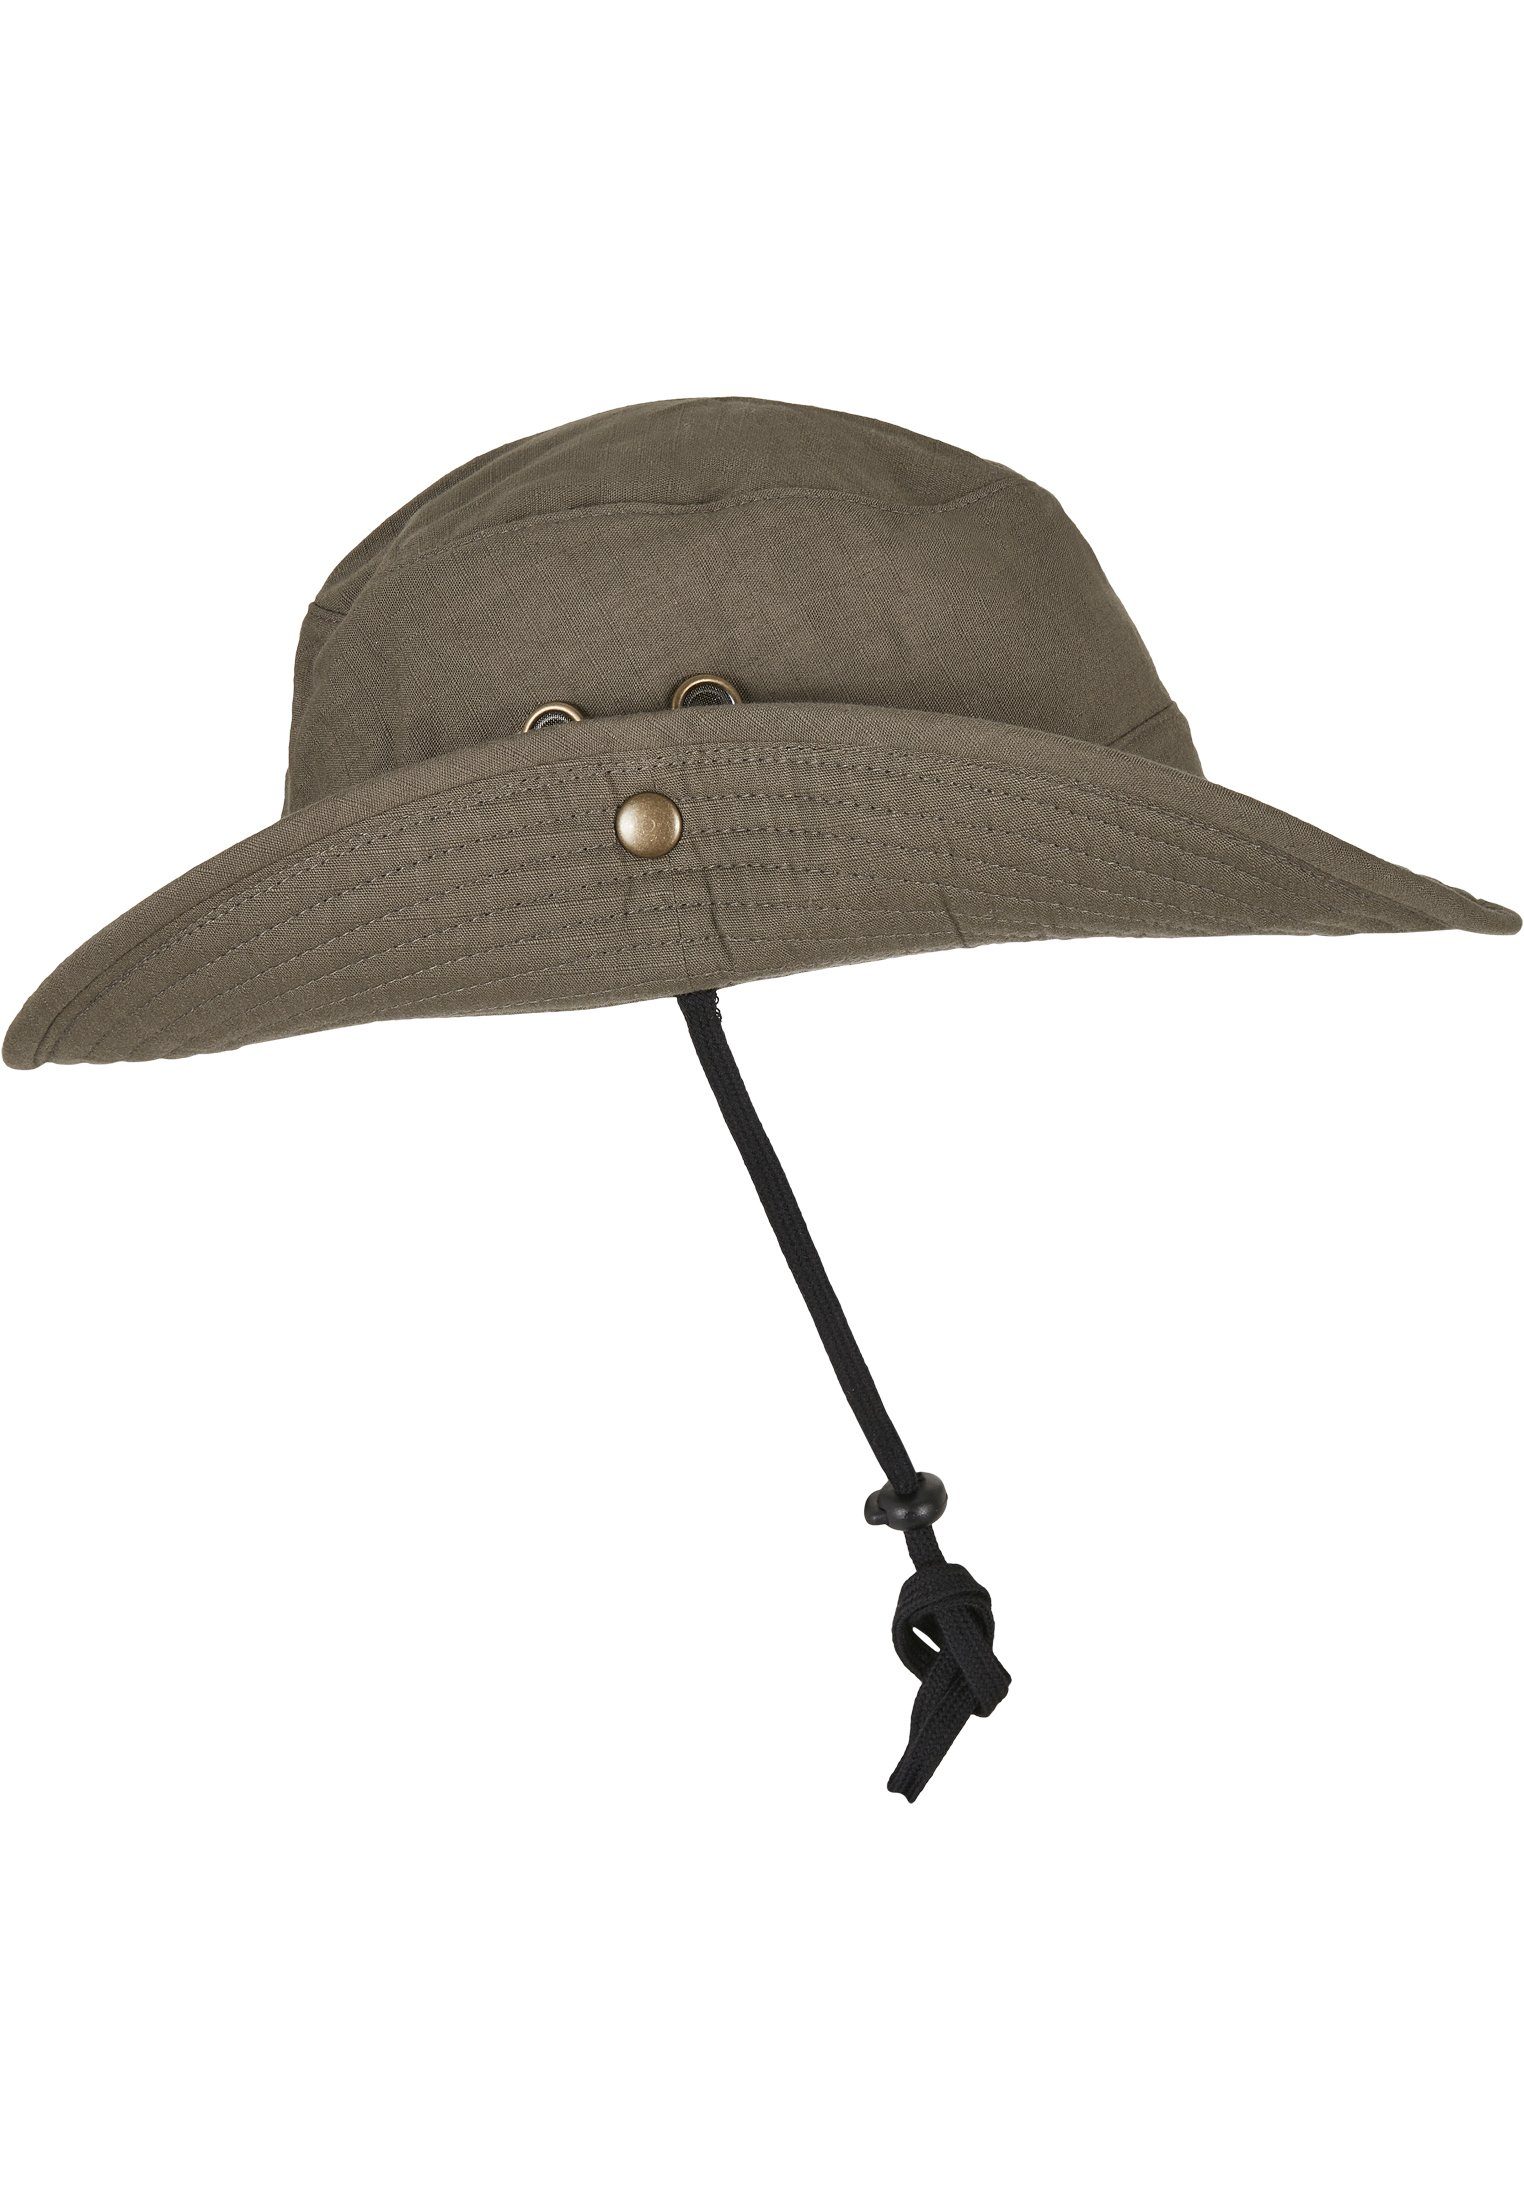 Flexfit Flex Cap darkolive Hat Angler